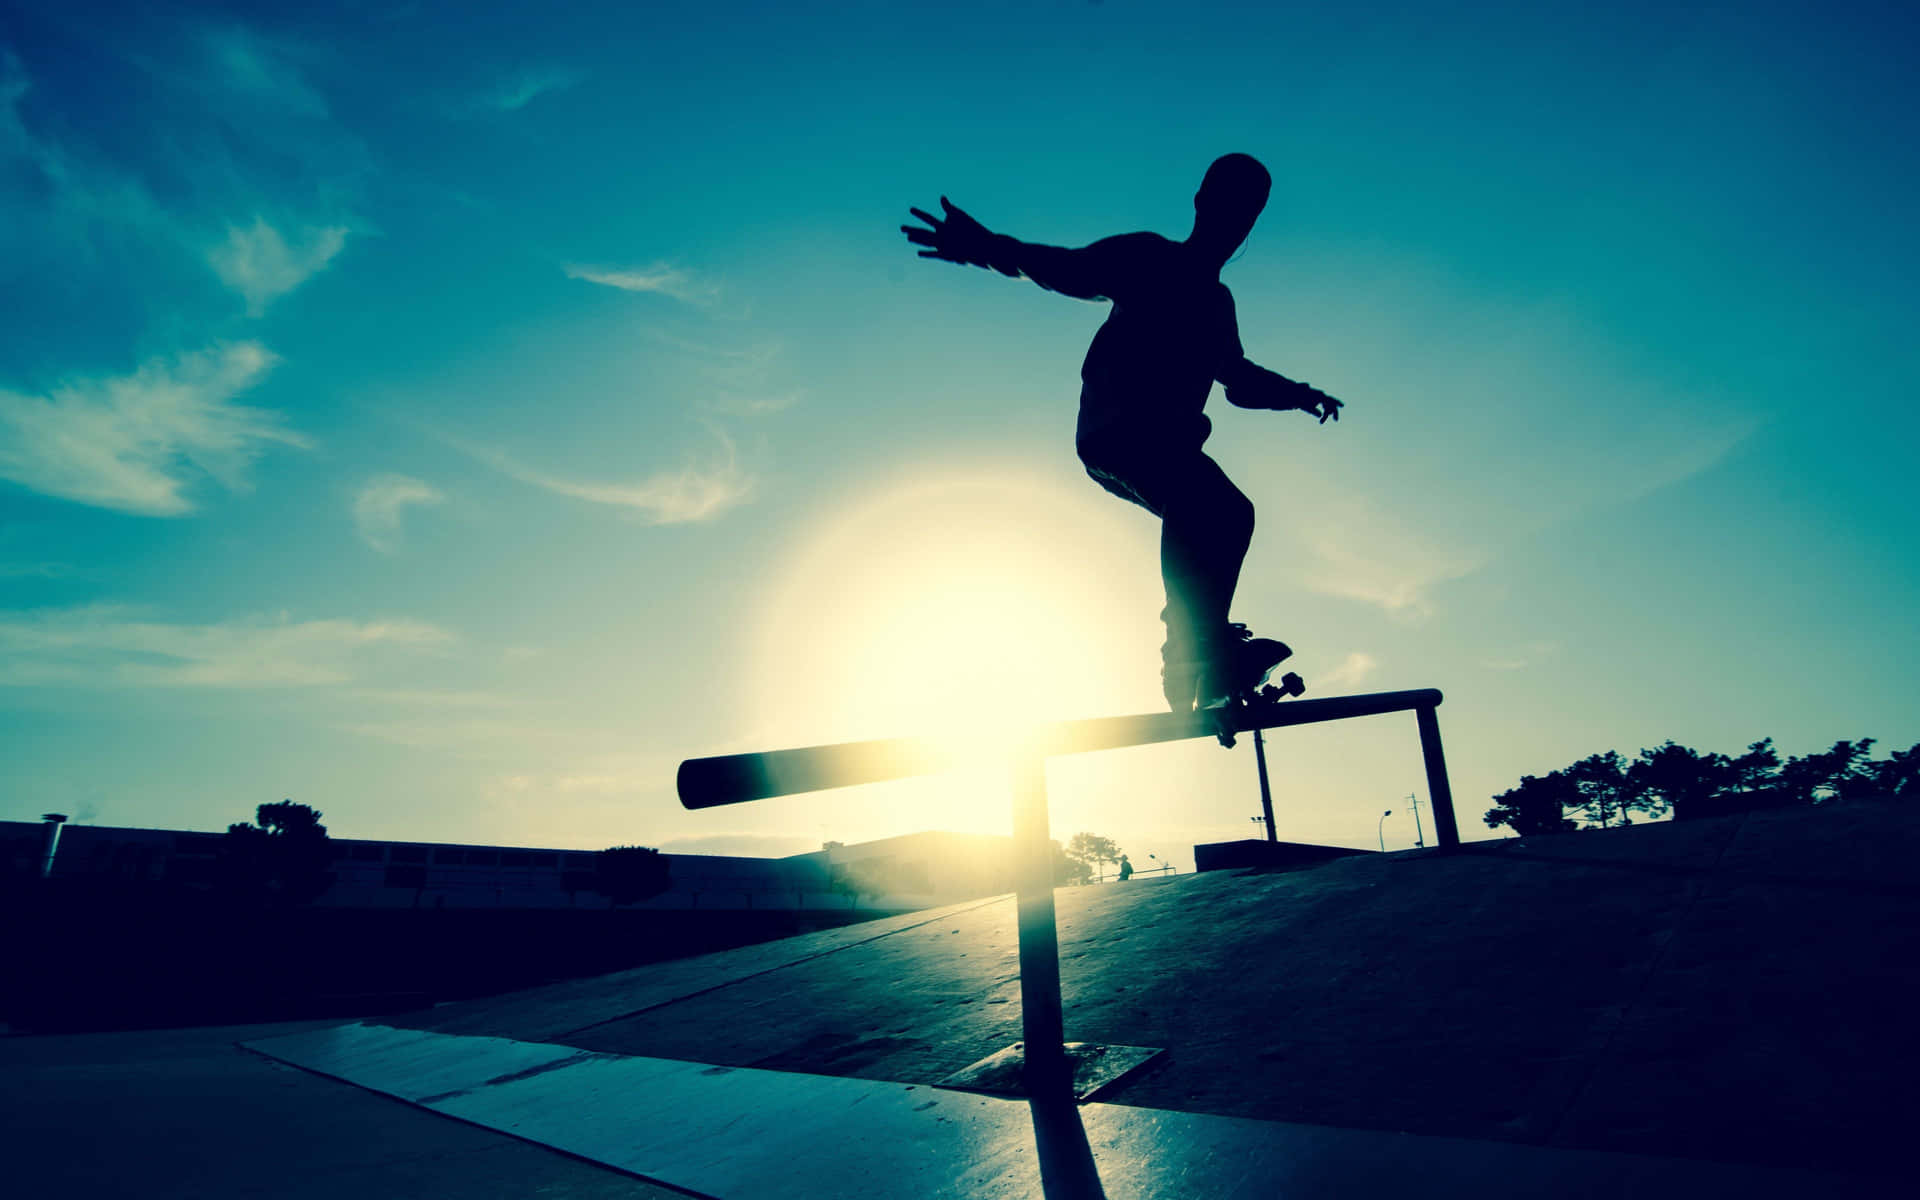 A Skateboarder Doing A Trick On A Rail